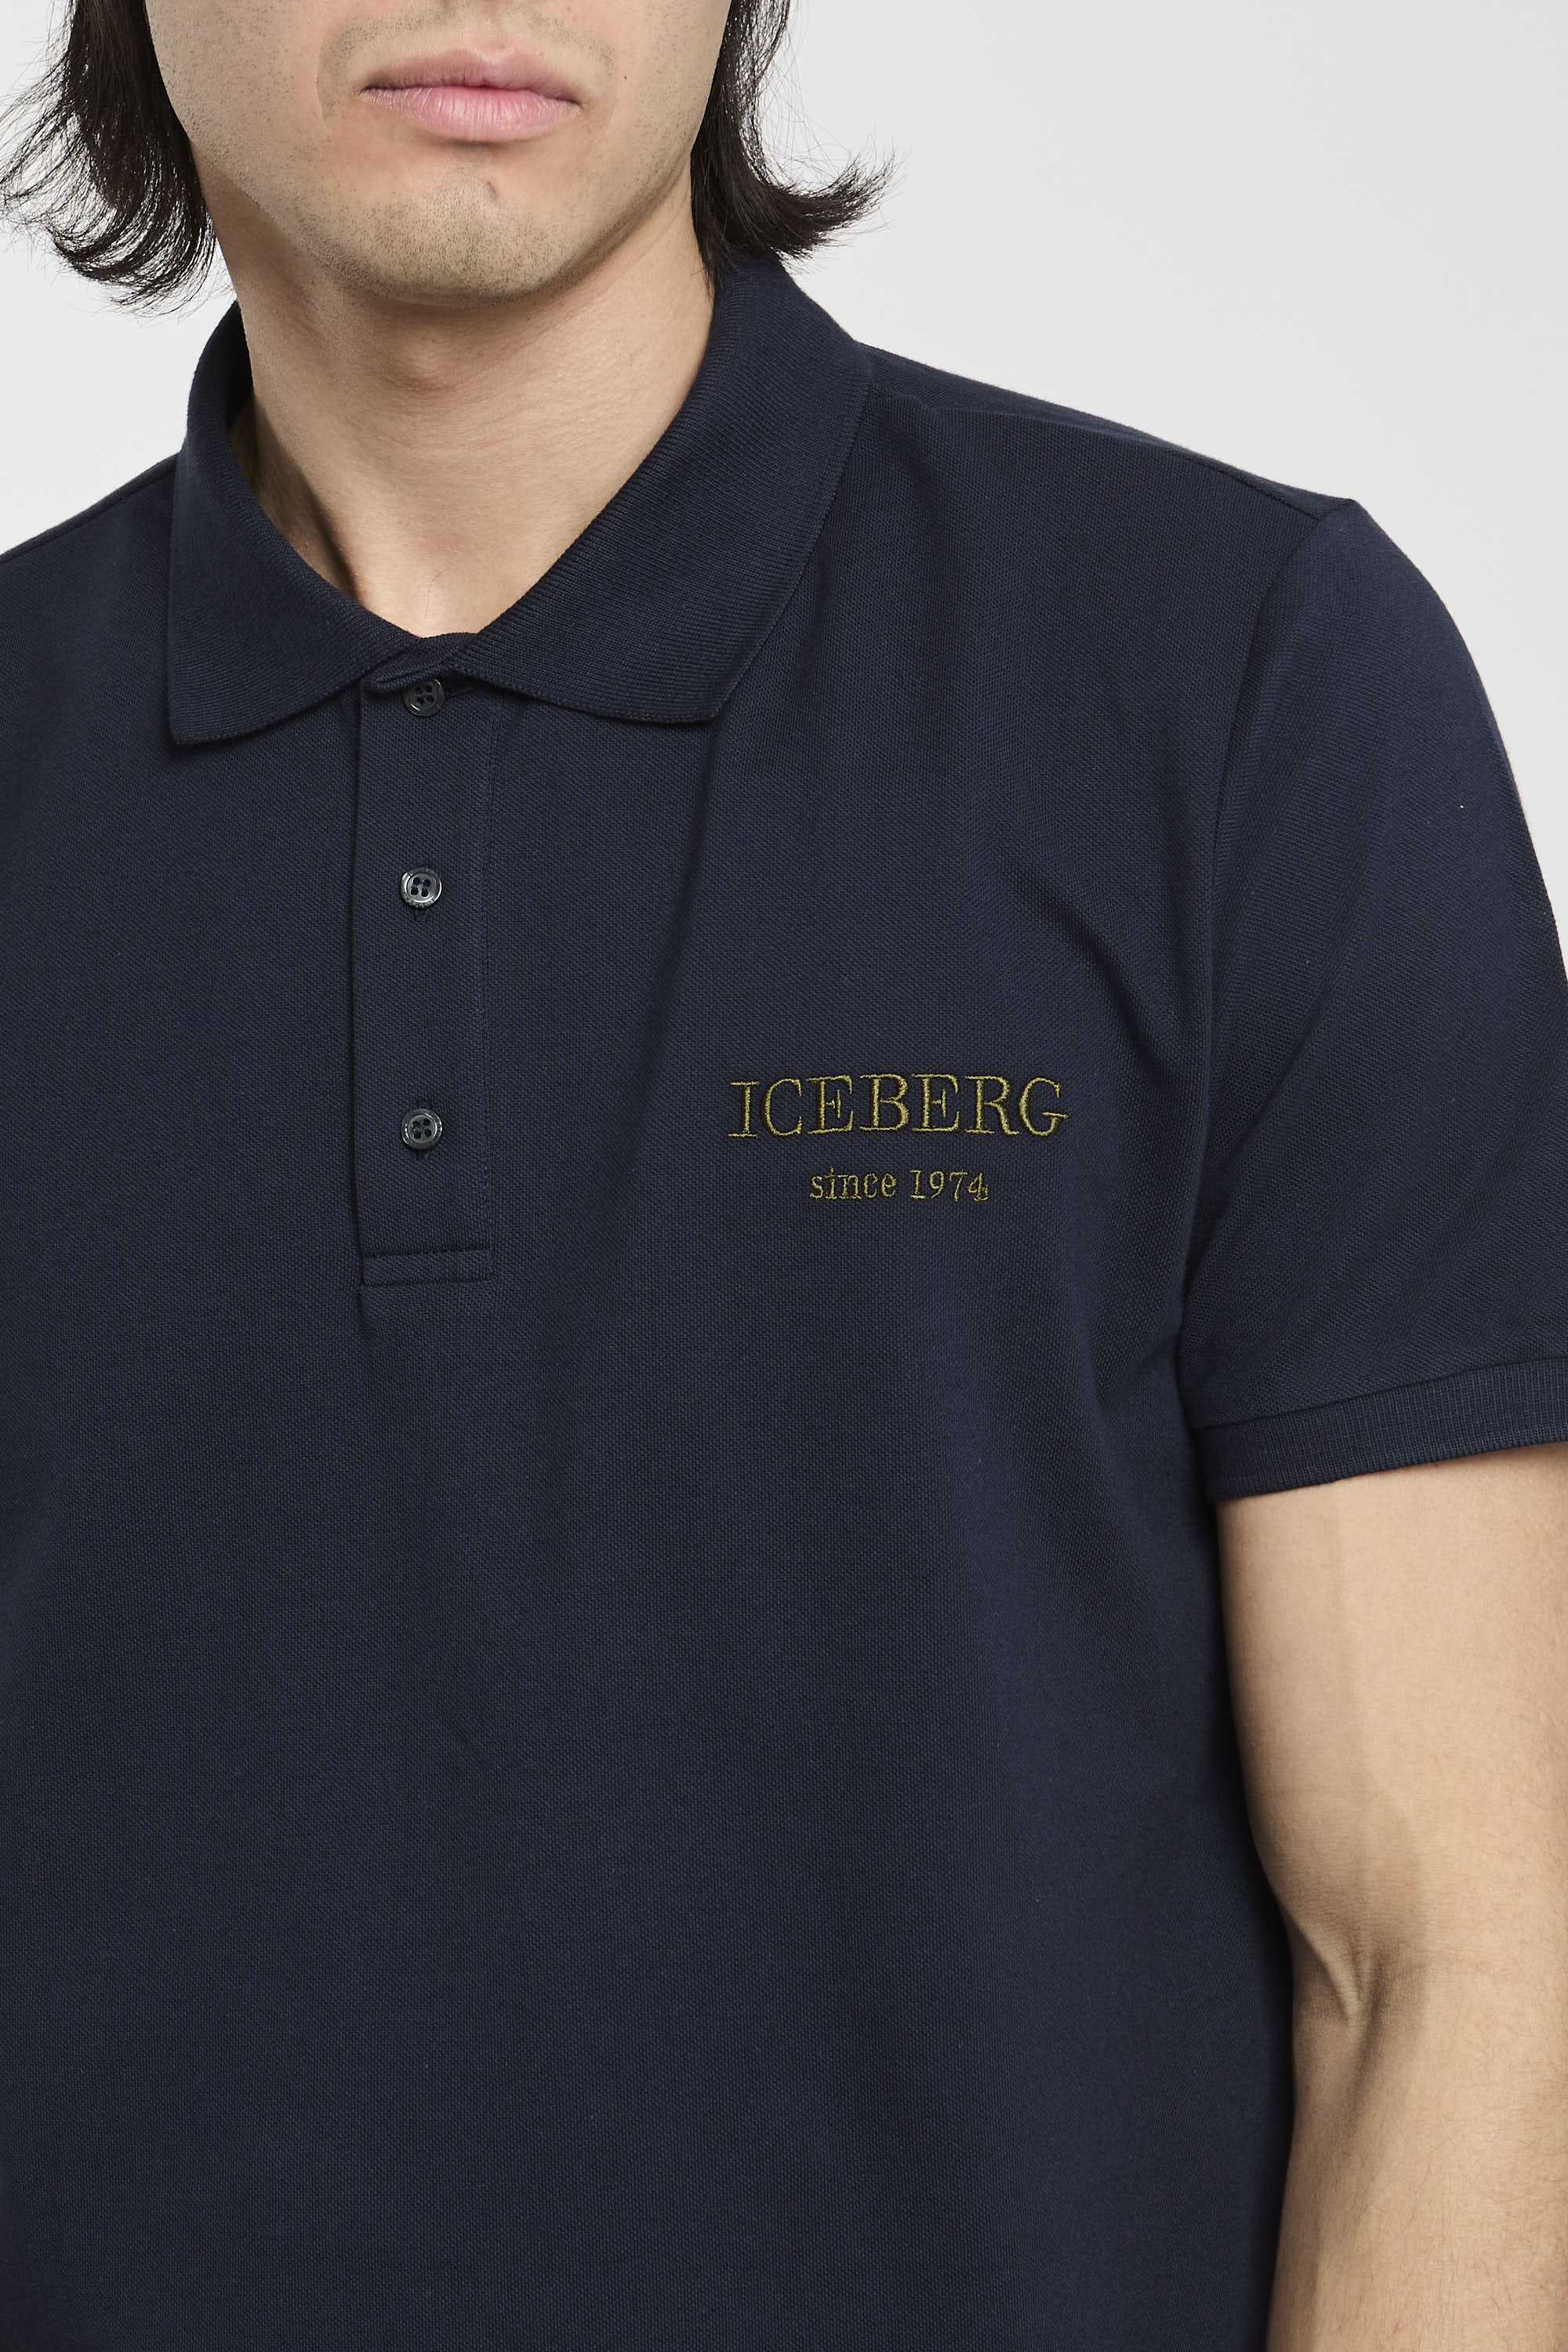 Iceberg Polo aus Jersey-Baumwolle in Blau-5